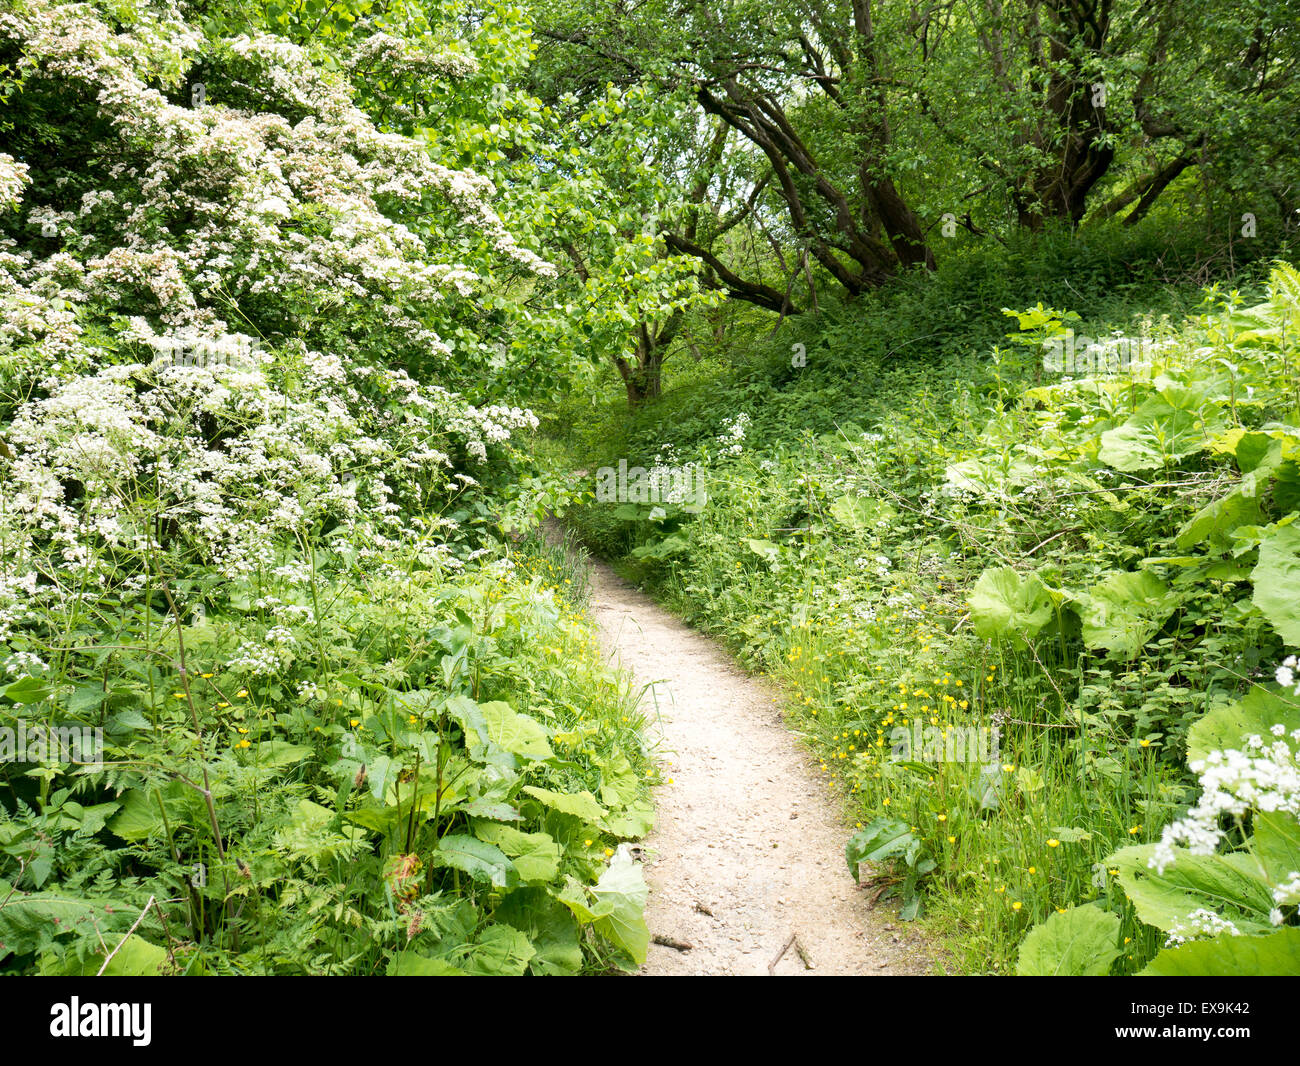 Footpath through summer foliage Stock Photo